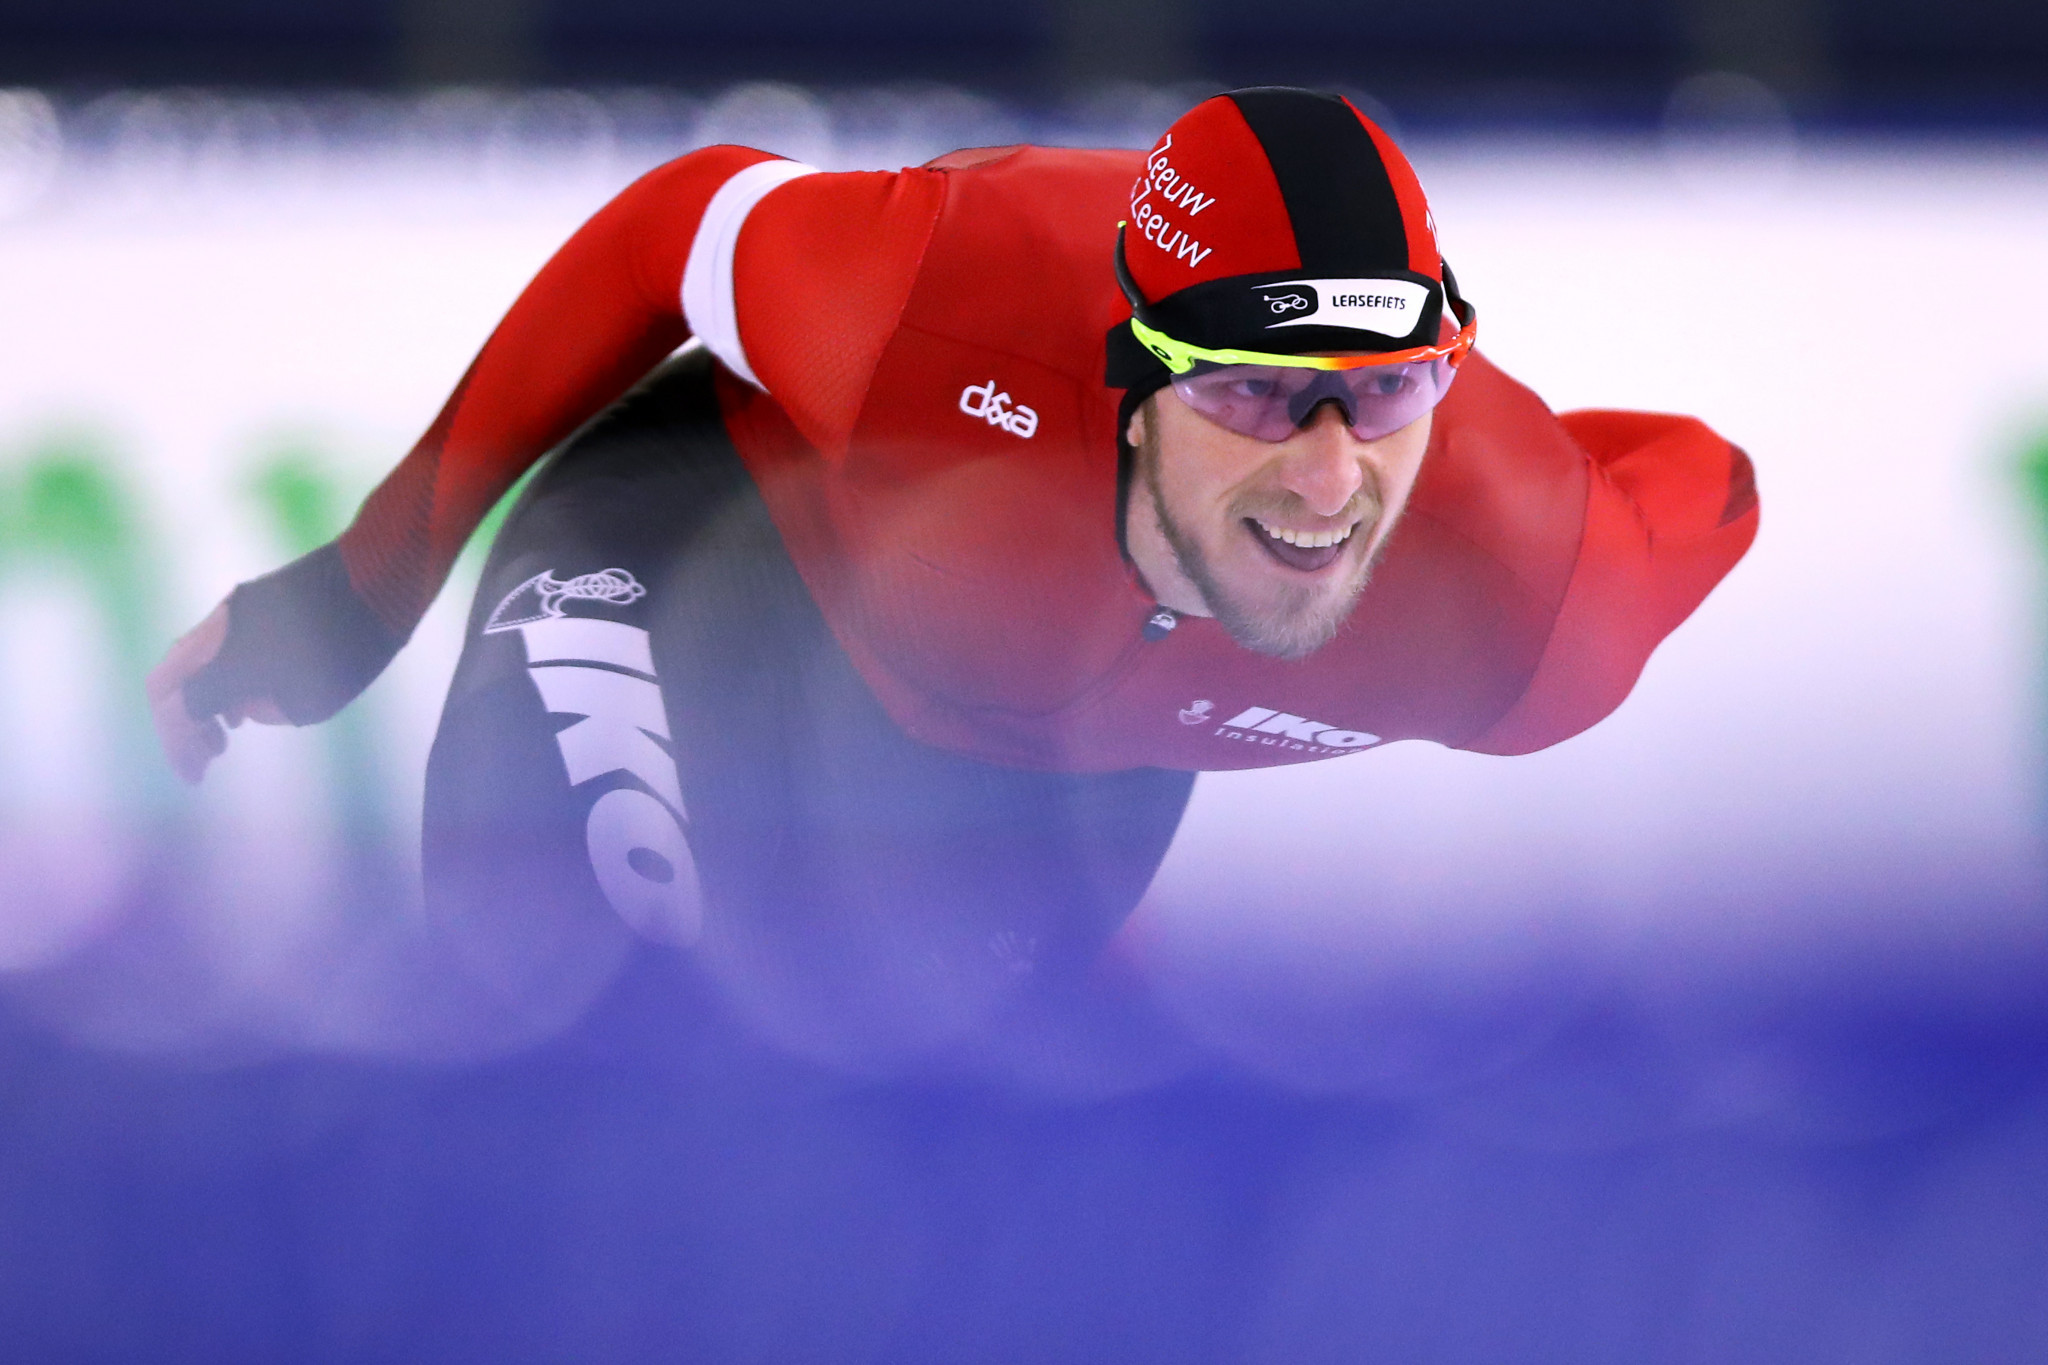 ISU reprimands Olympic gold medallist Blokhuijsen for refusal to wear mask during drugs test